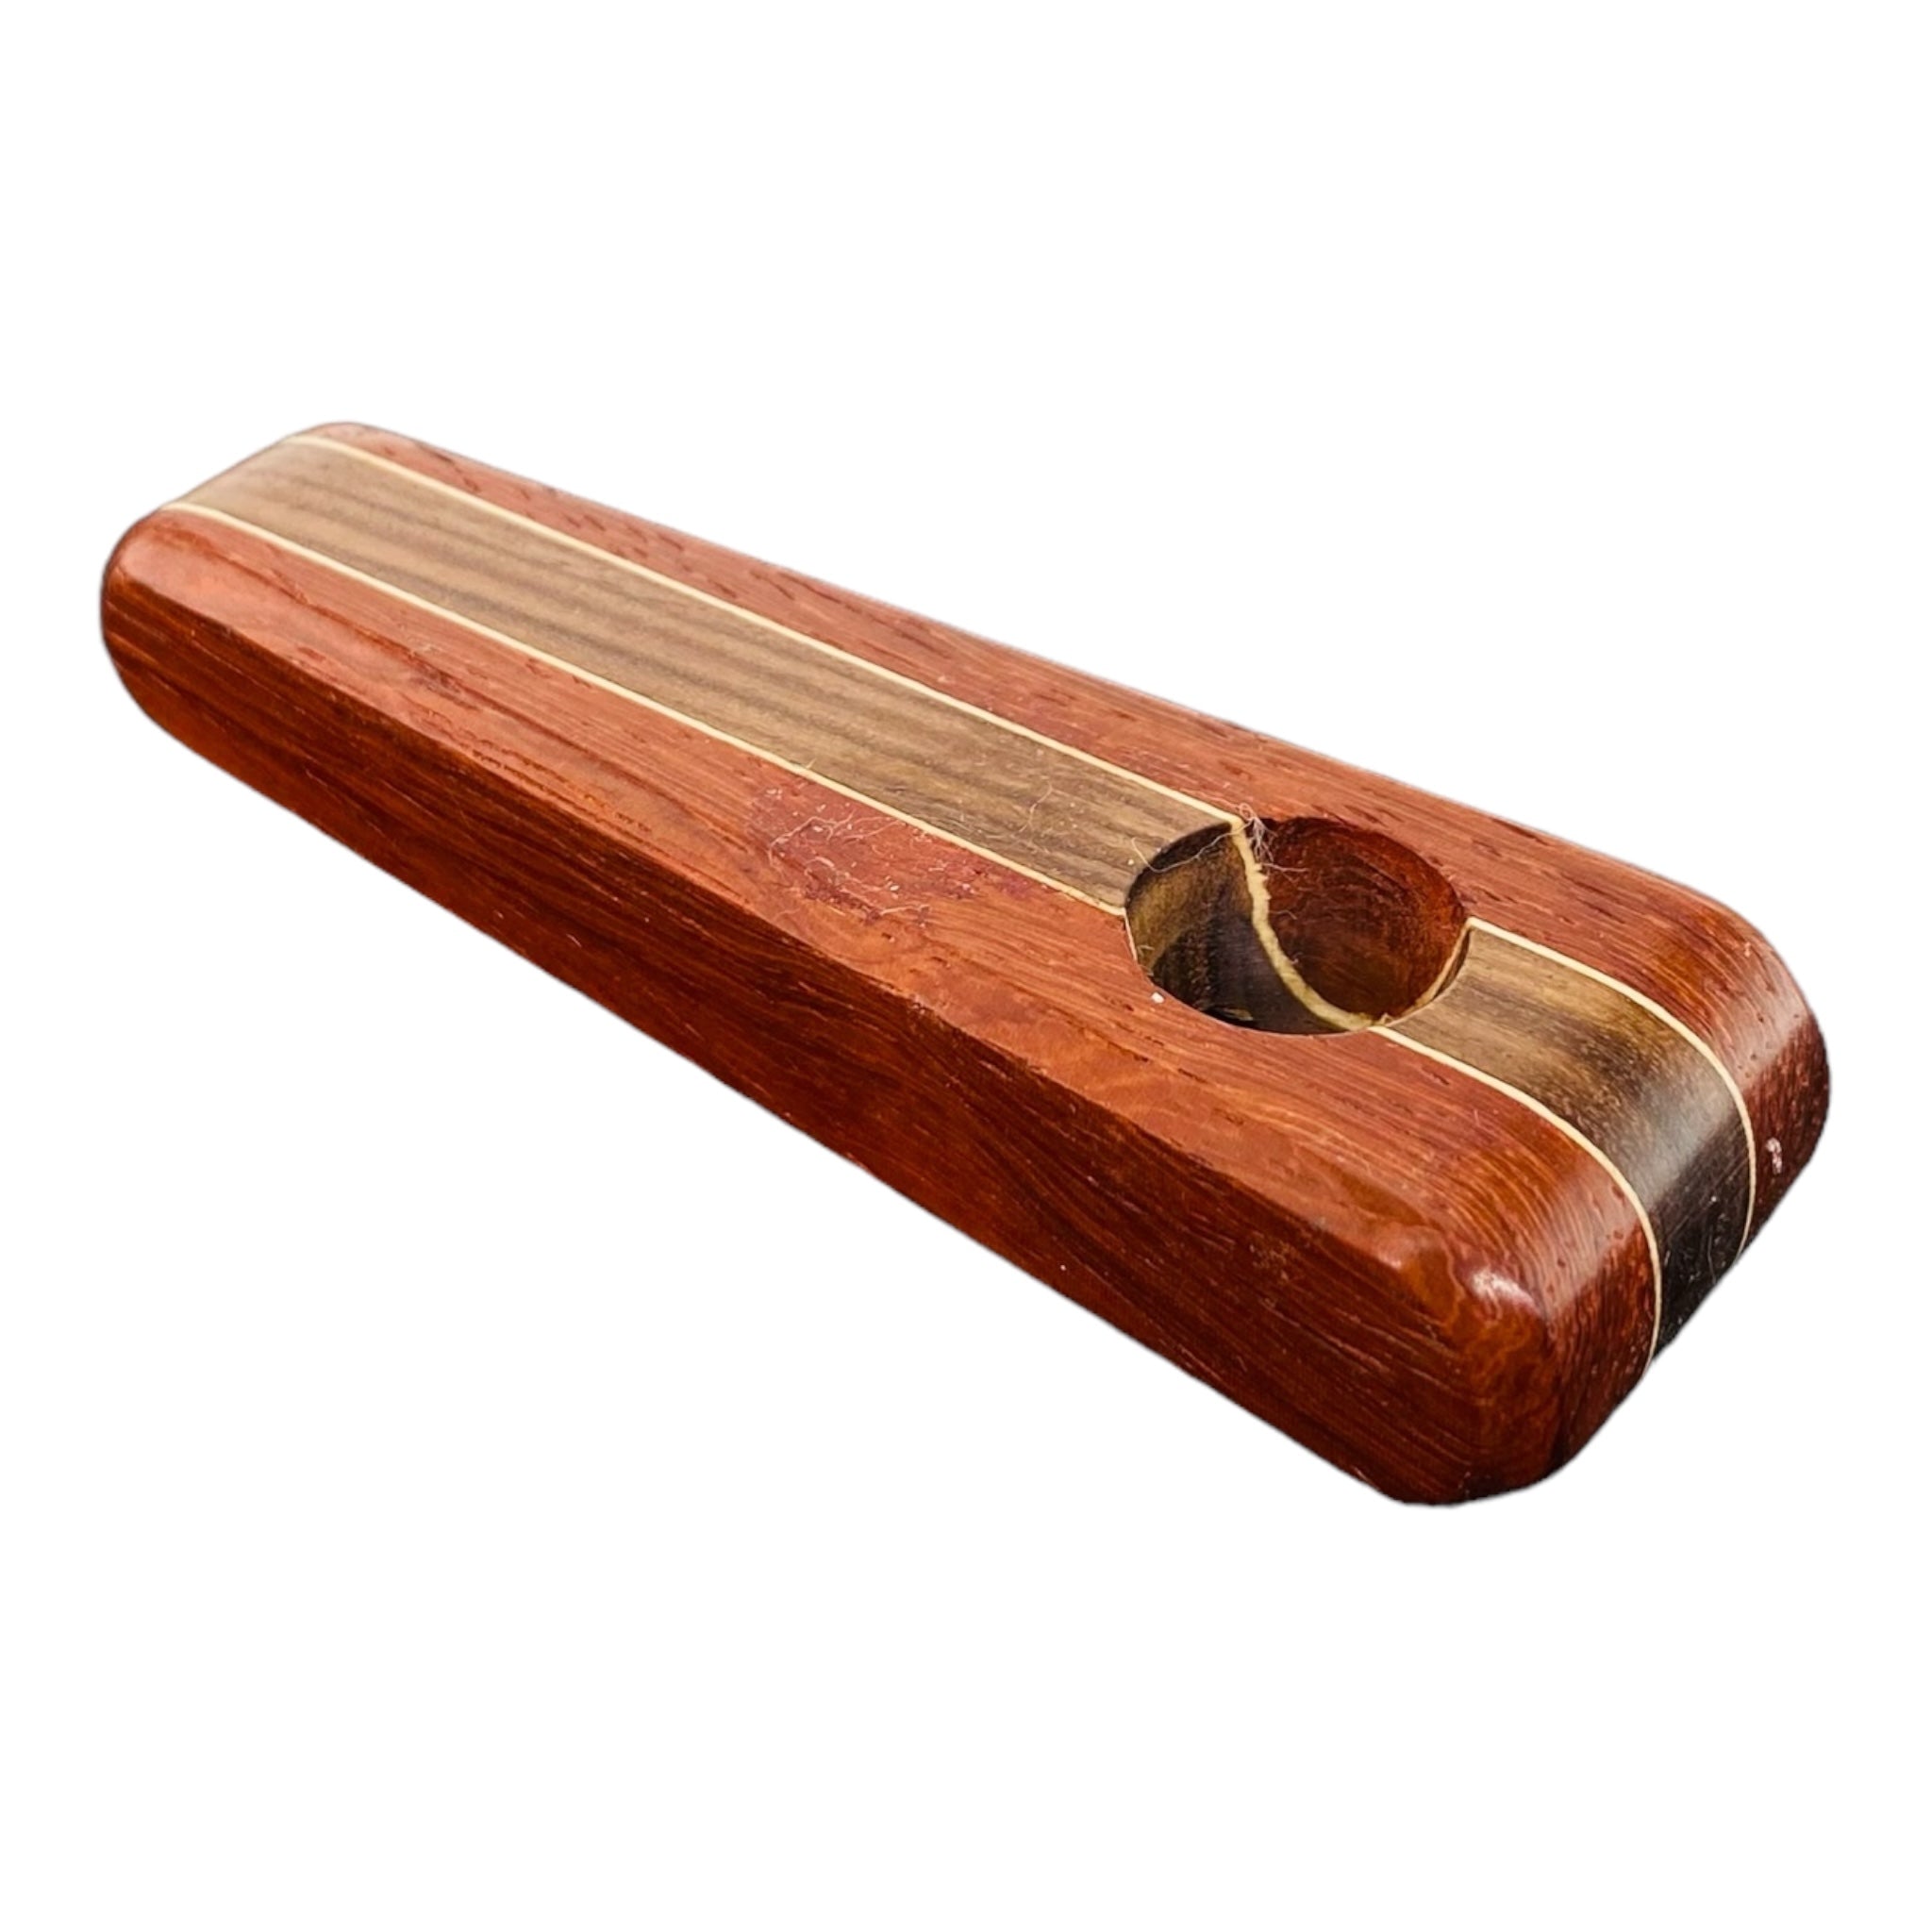 Wood Hand Pipe - Small Two Tone Hardwood Smoking Pipe